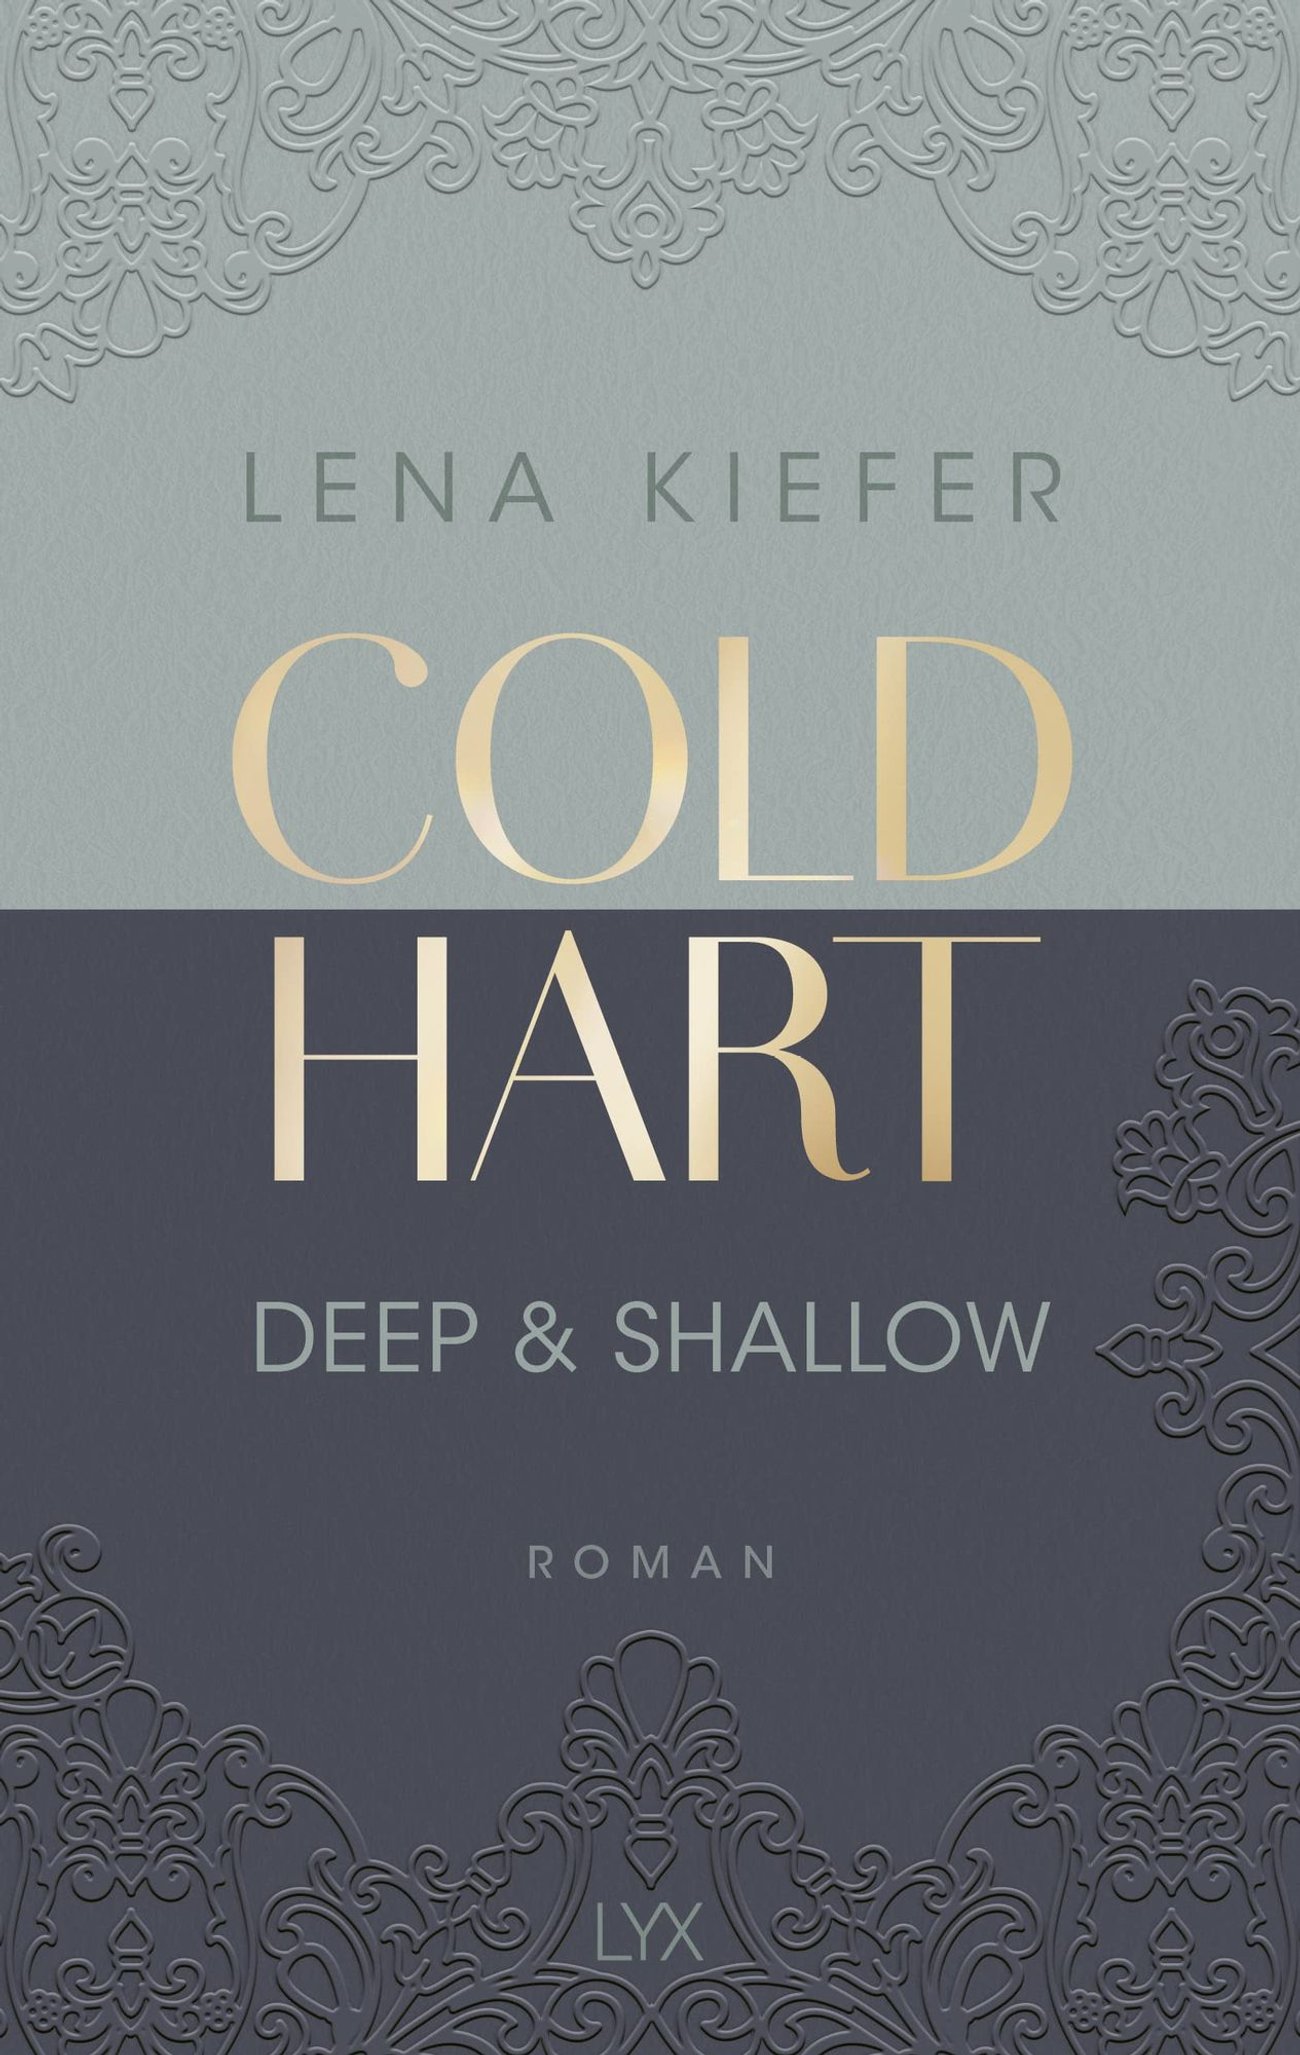 Coldhart - Deep & Shallow von Lena Kiefer